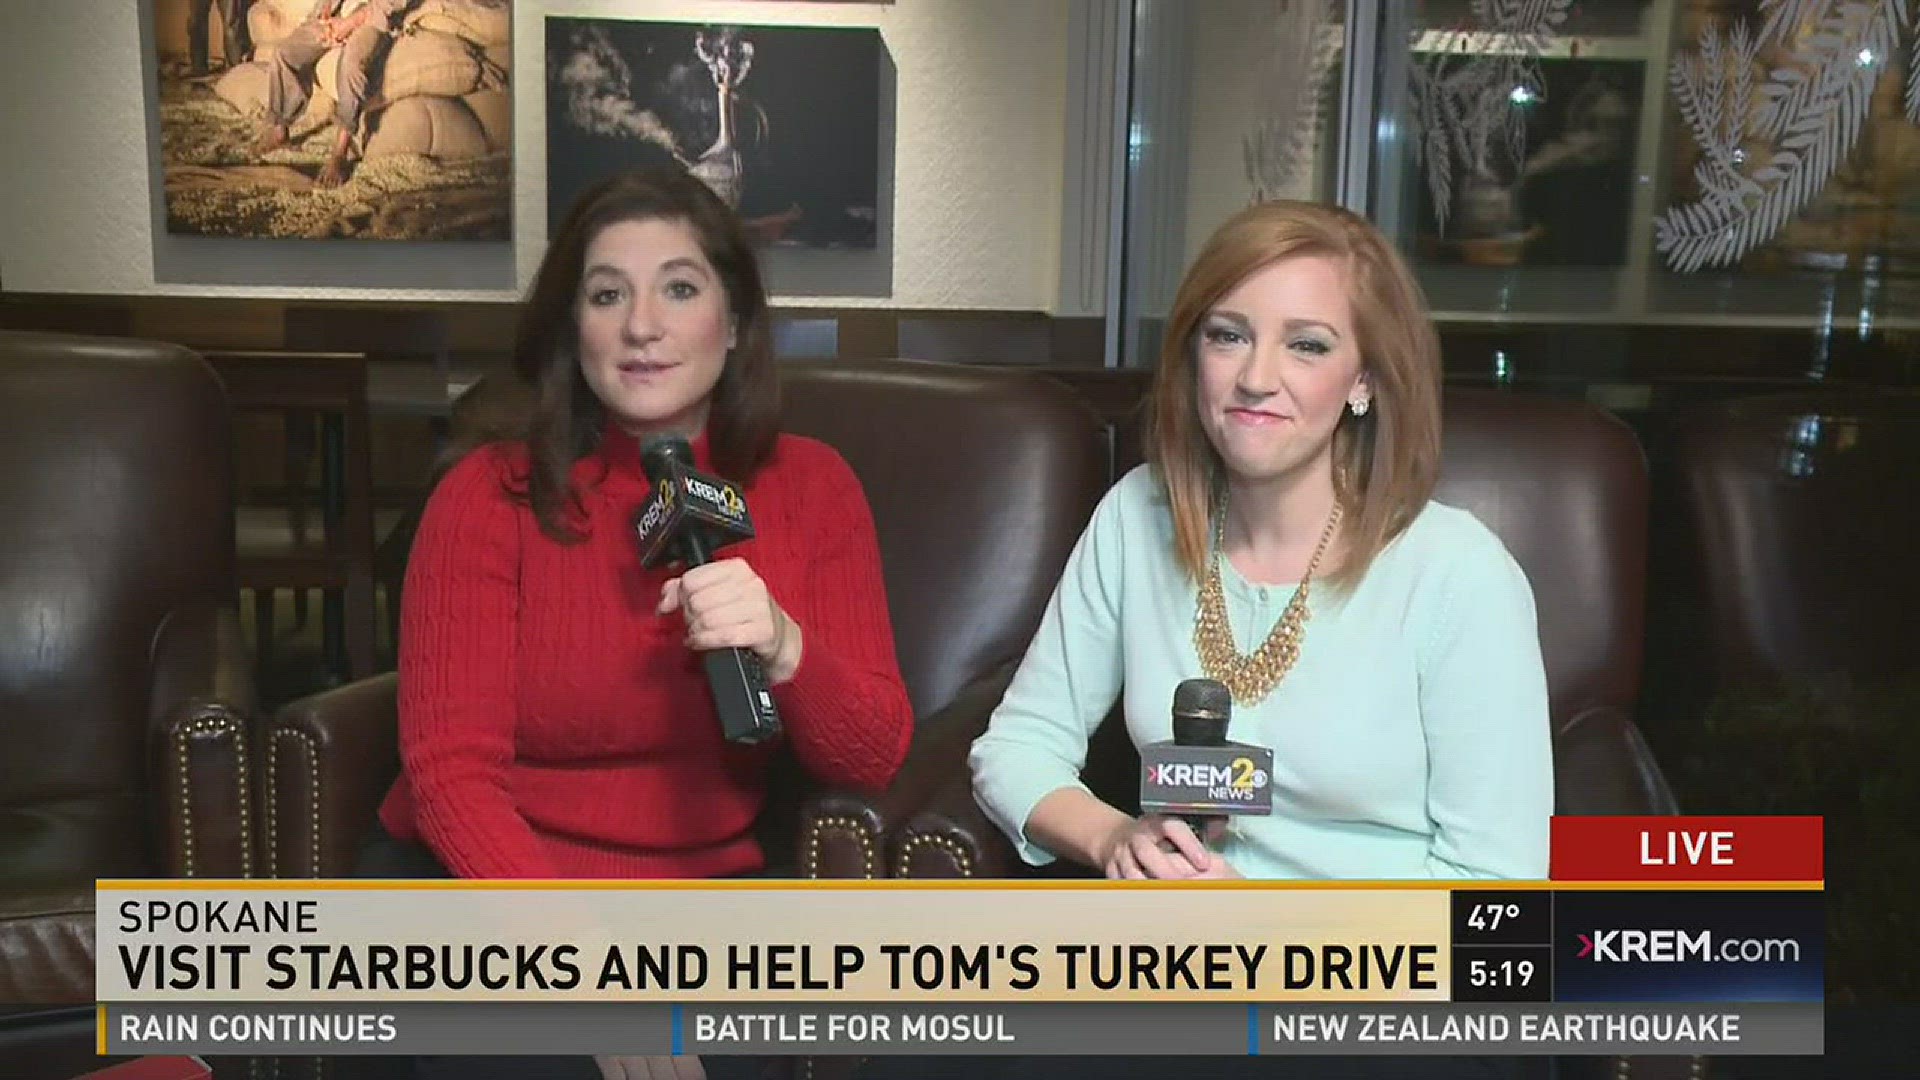 Visit Starbucks and help Tom's Turkey Drive